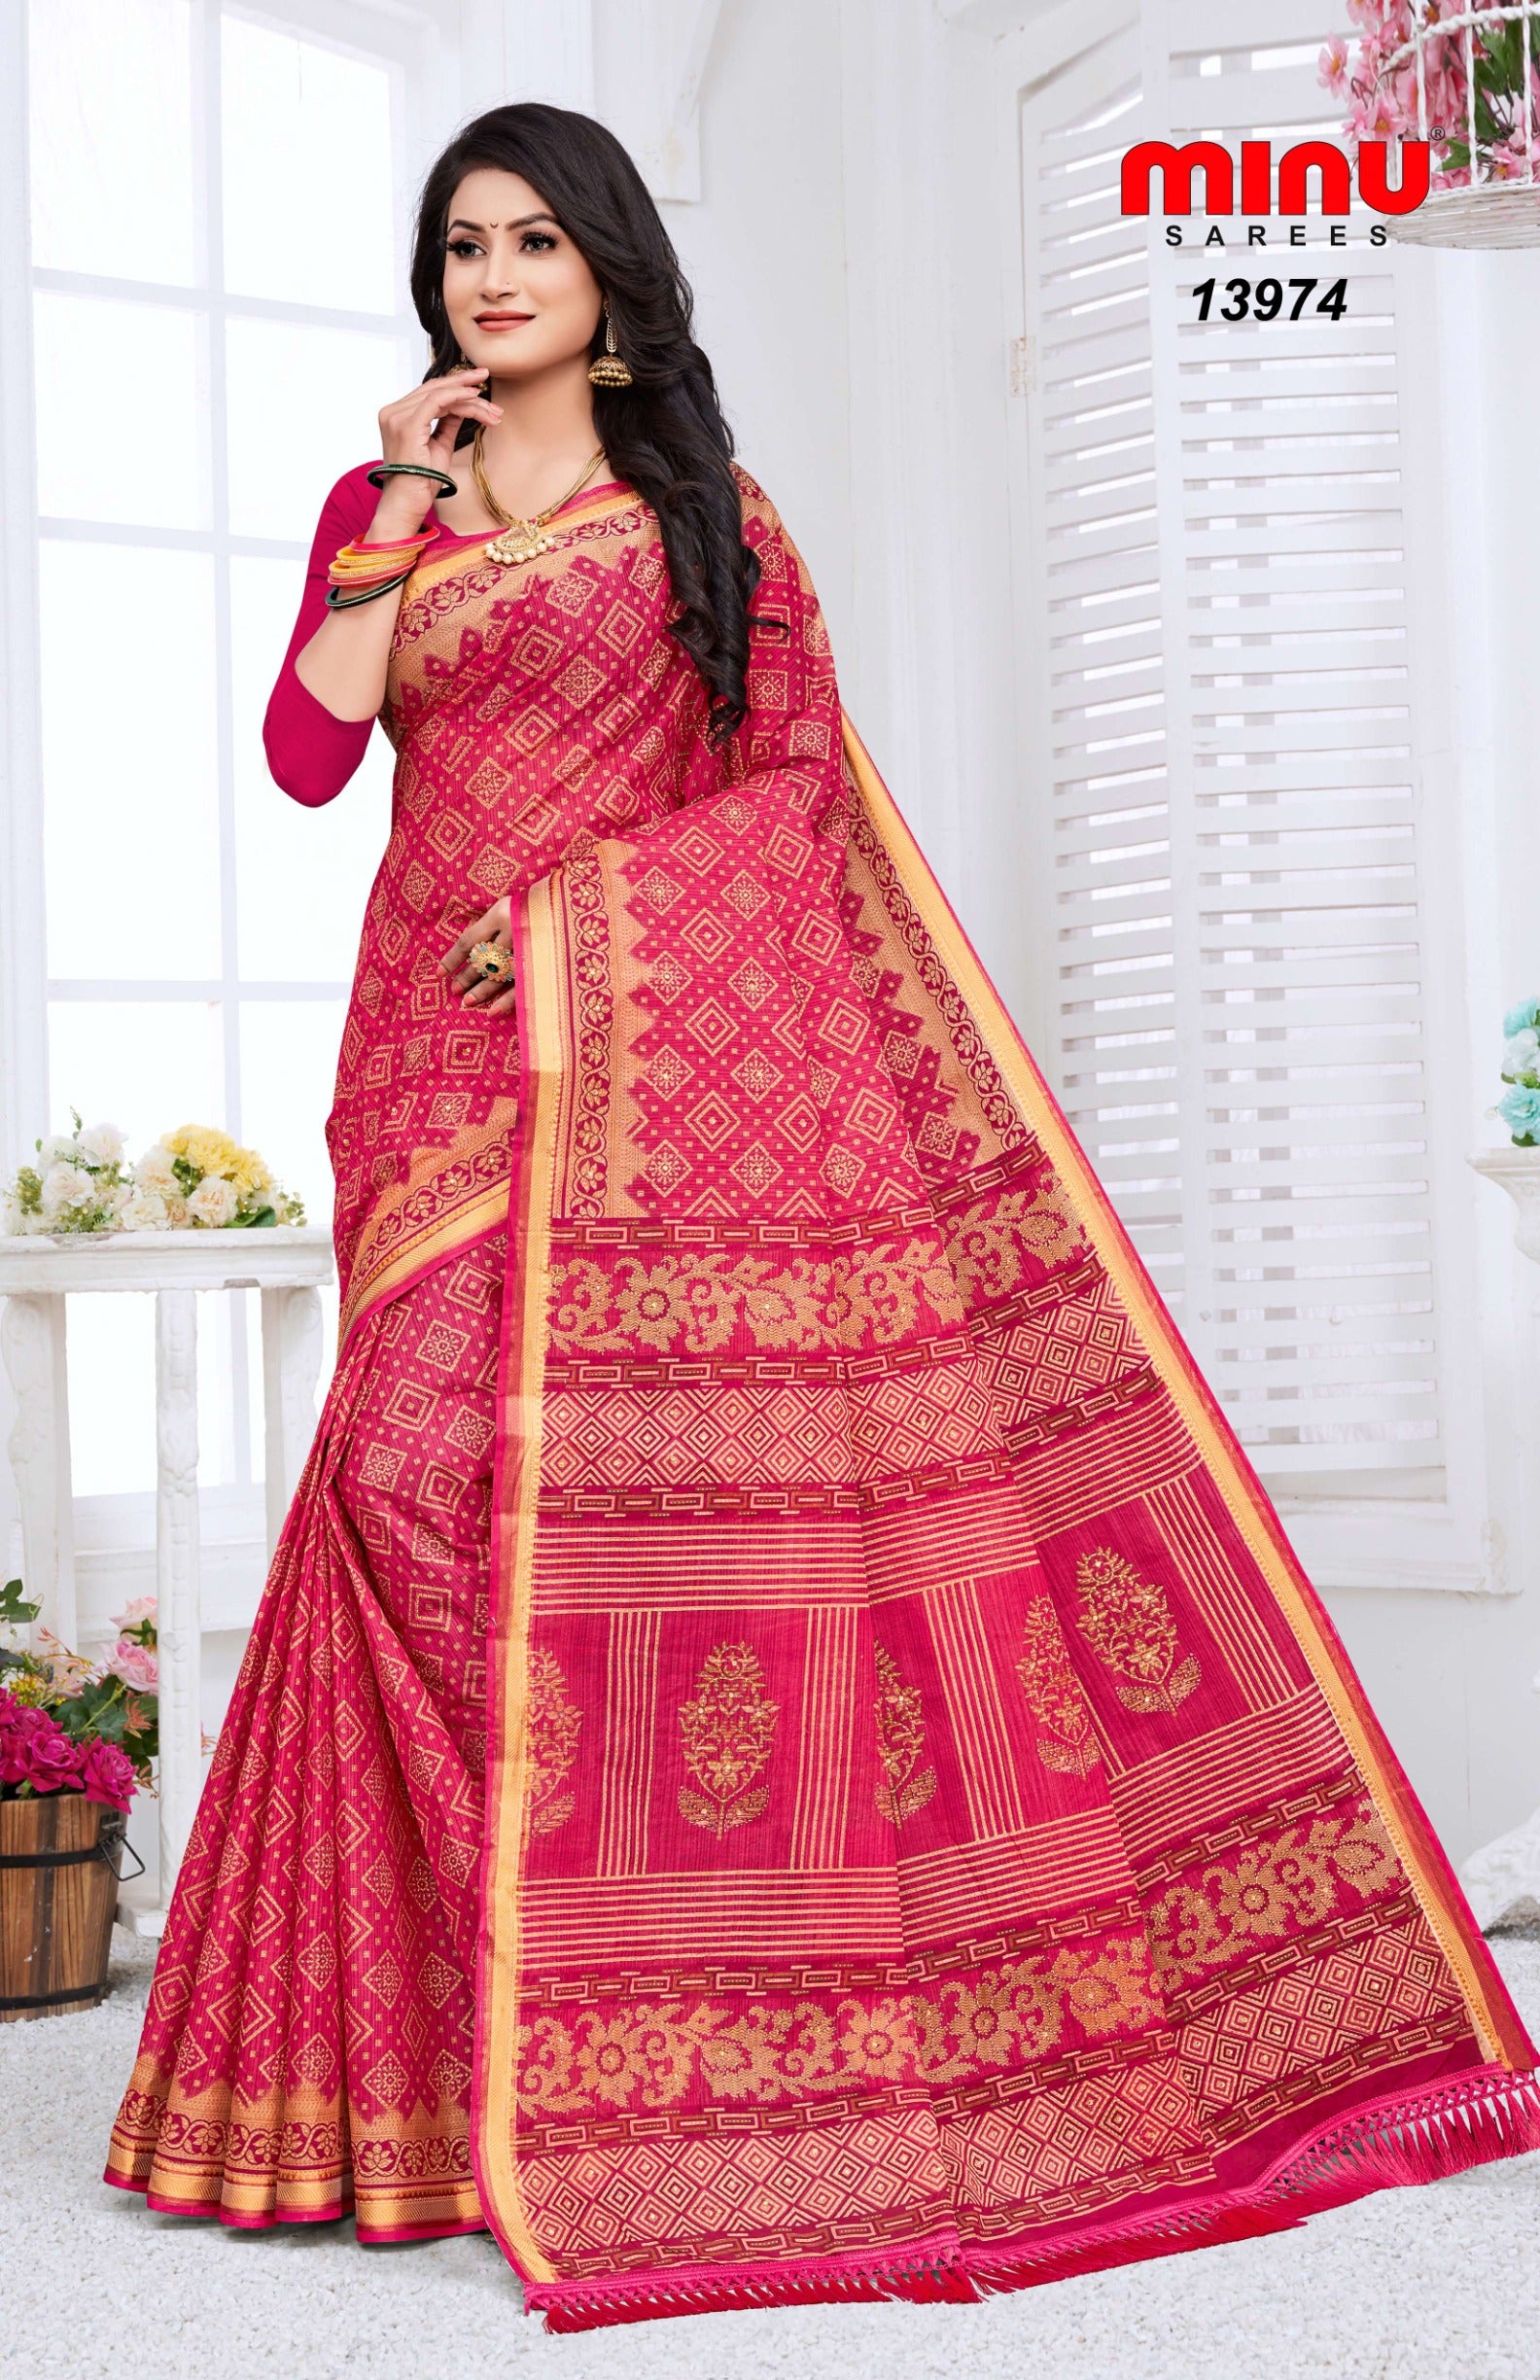 Cotton saree wholesale wearing woman